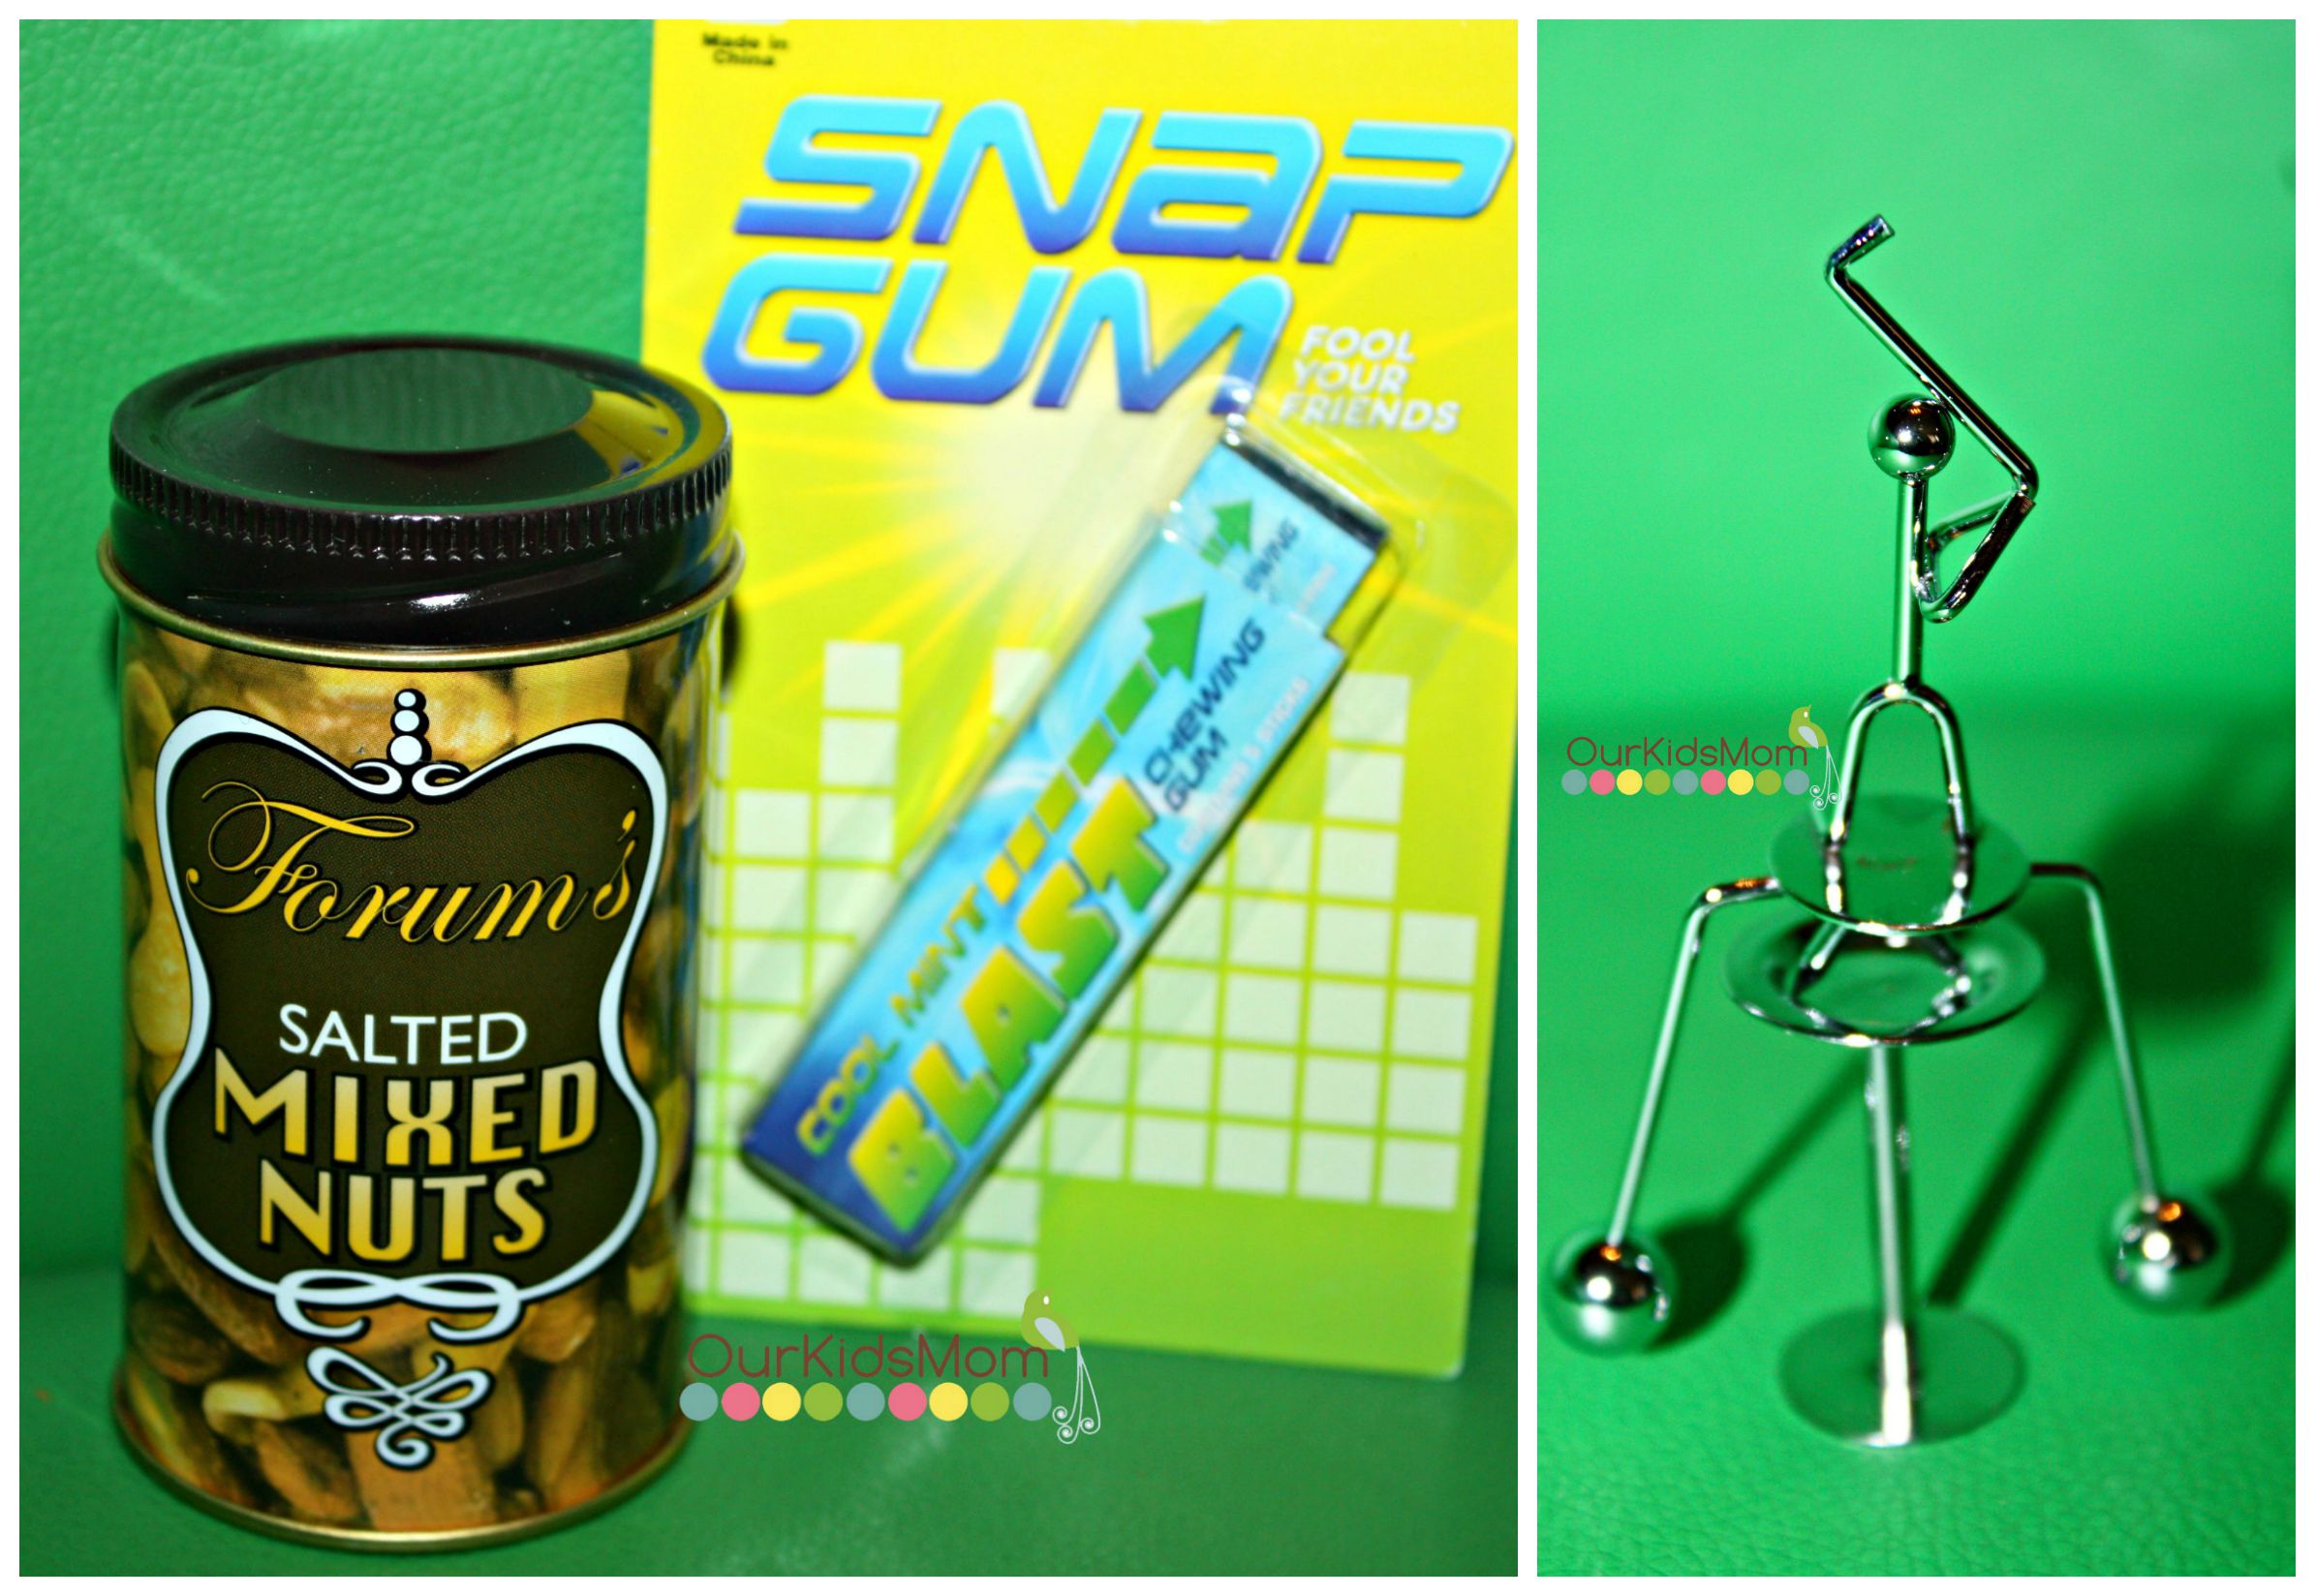 Snap Gum, Nuts in tin can joke, balancing golfer